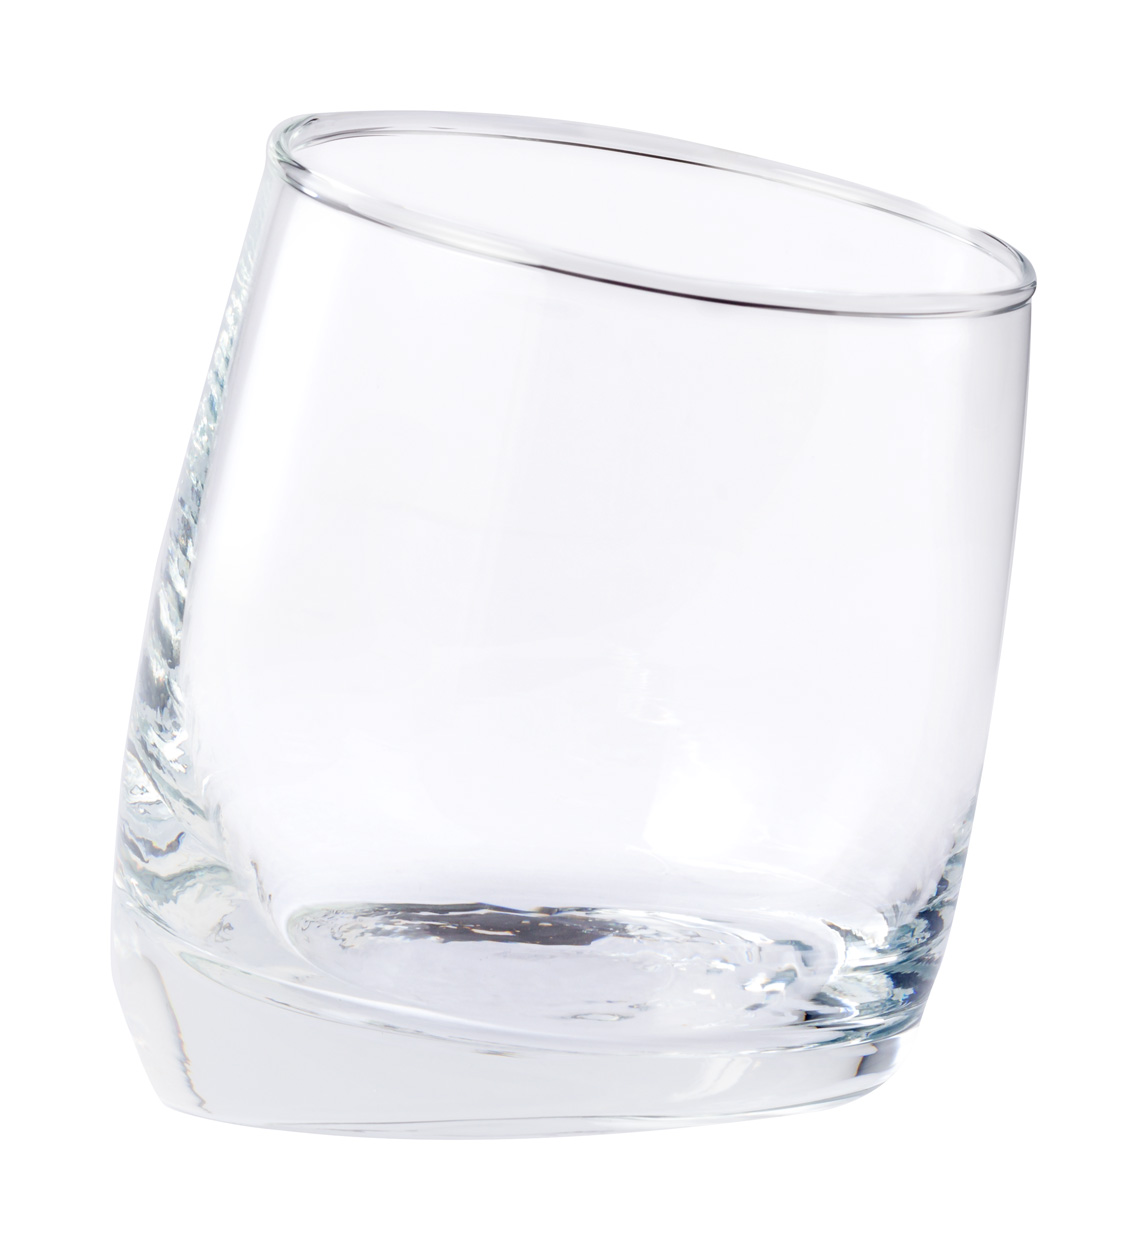 Merzex Whiskyglas - Transparente